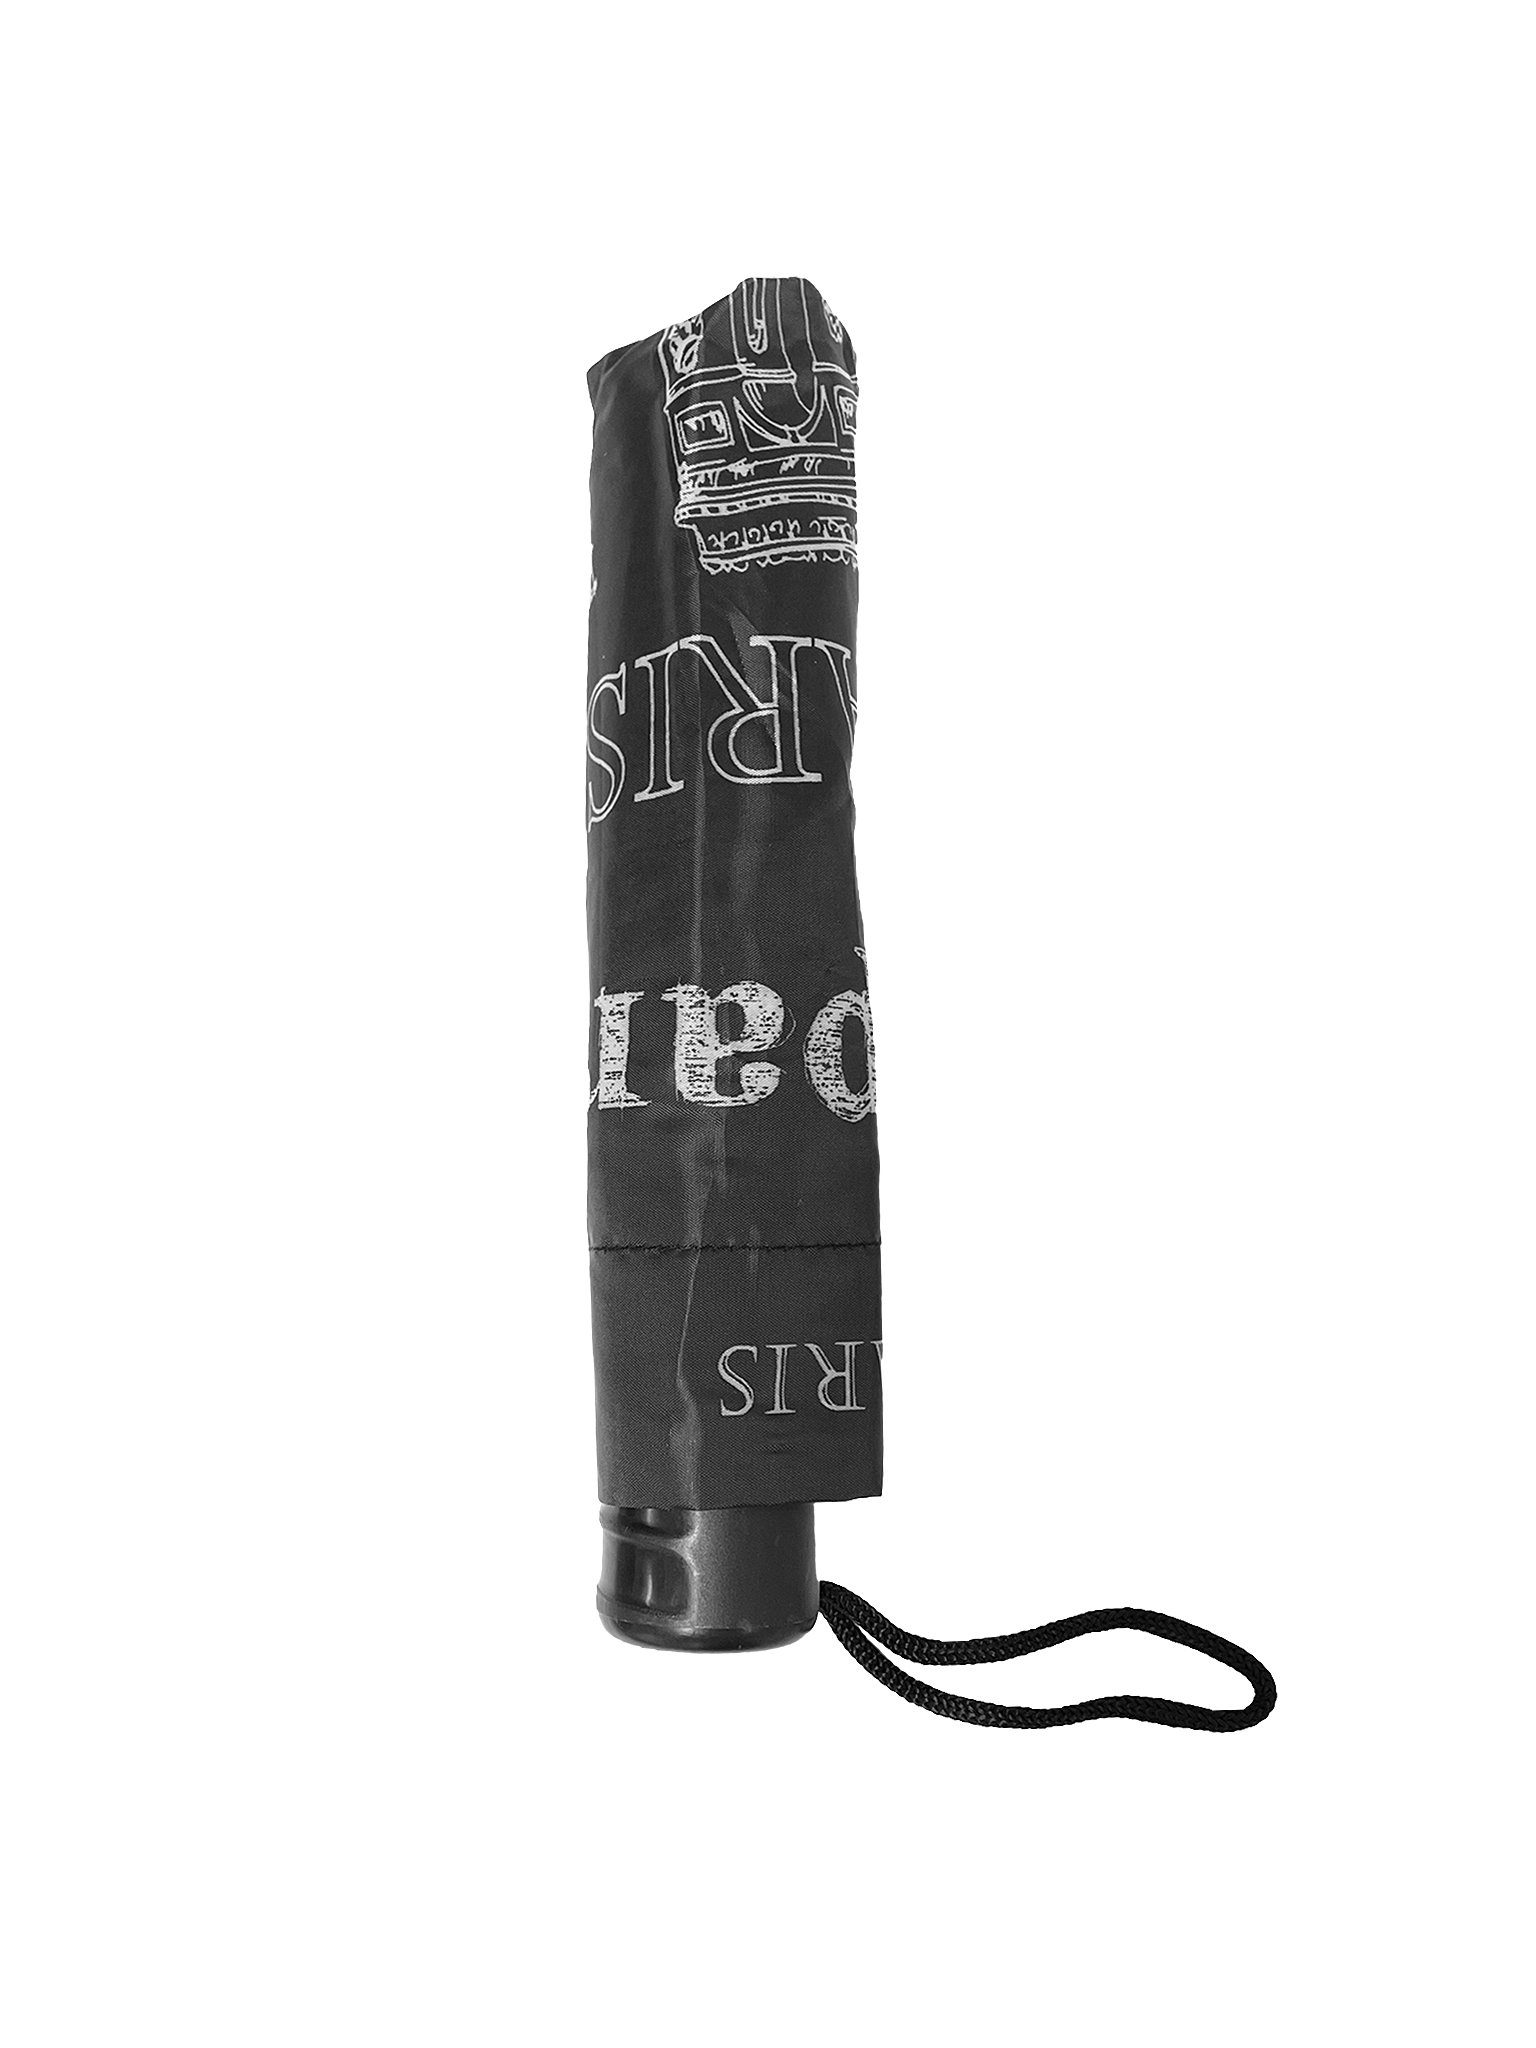 Paris Taschenschirm, ANELY Kleiner in Schwarz Gemustert 6746 Regenschirm Taschenregenschirm